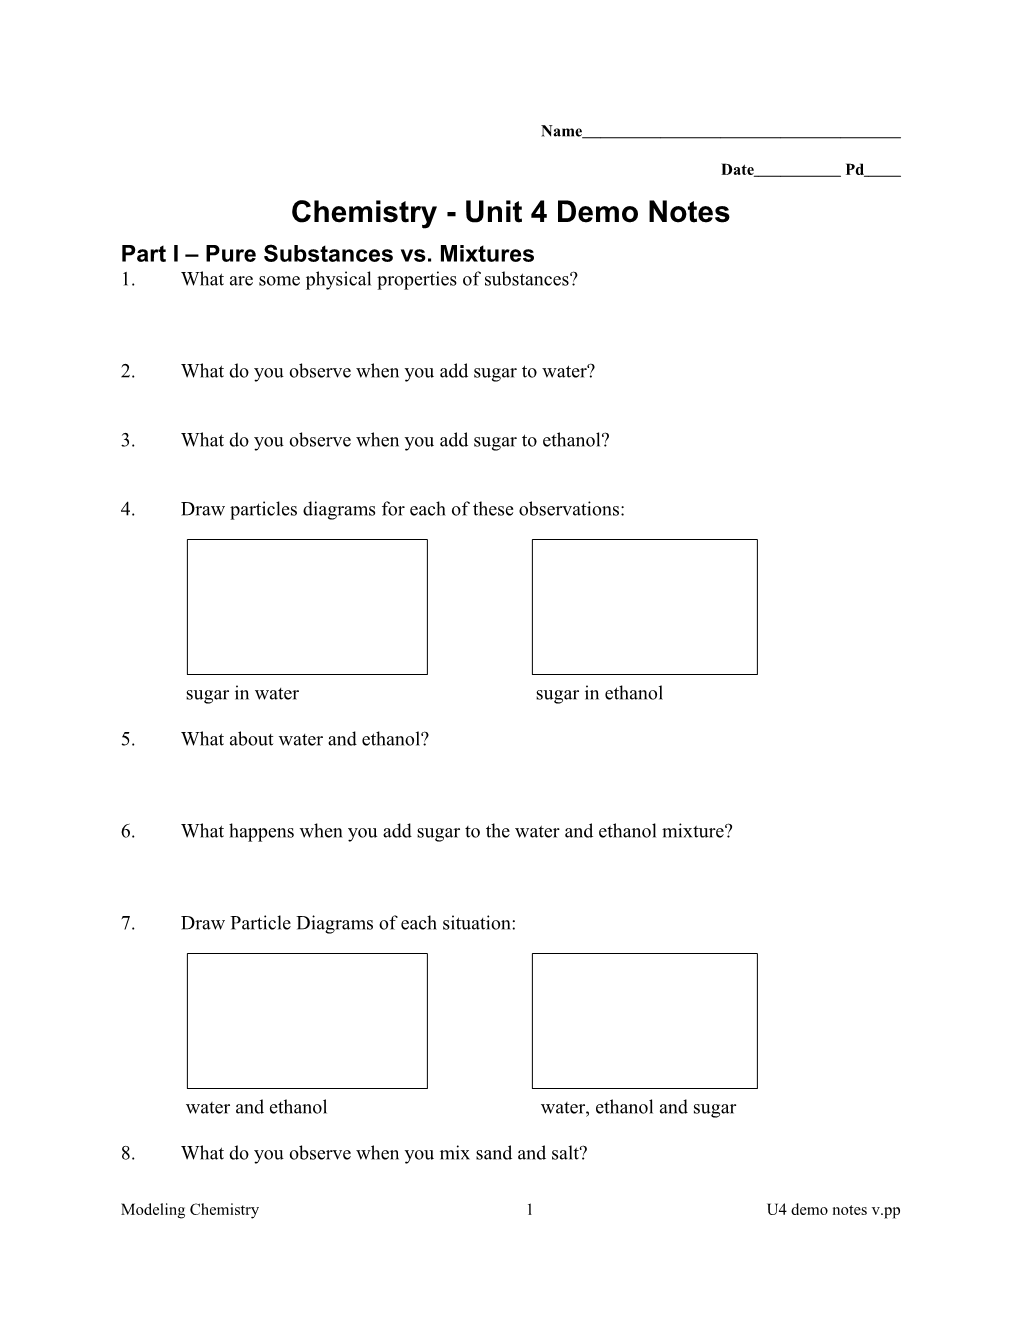 Chemistry - Unit 4 Demo Notes